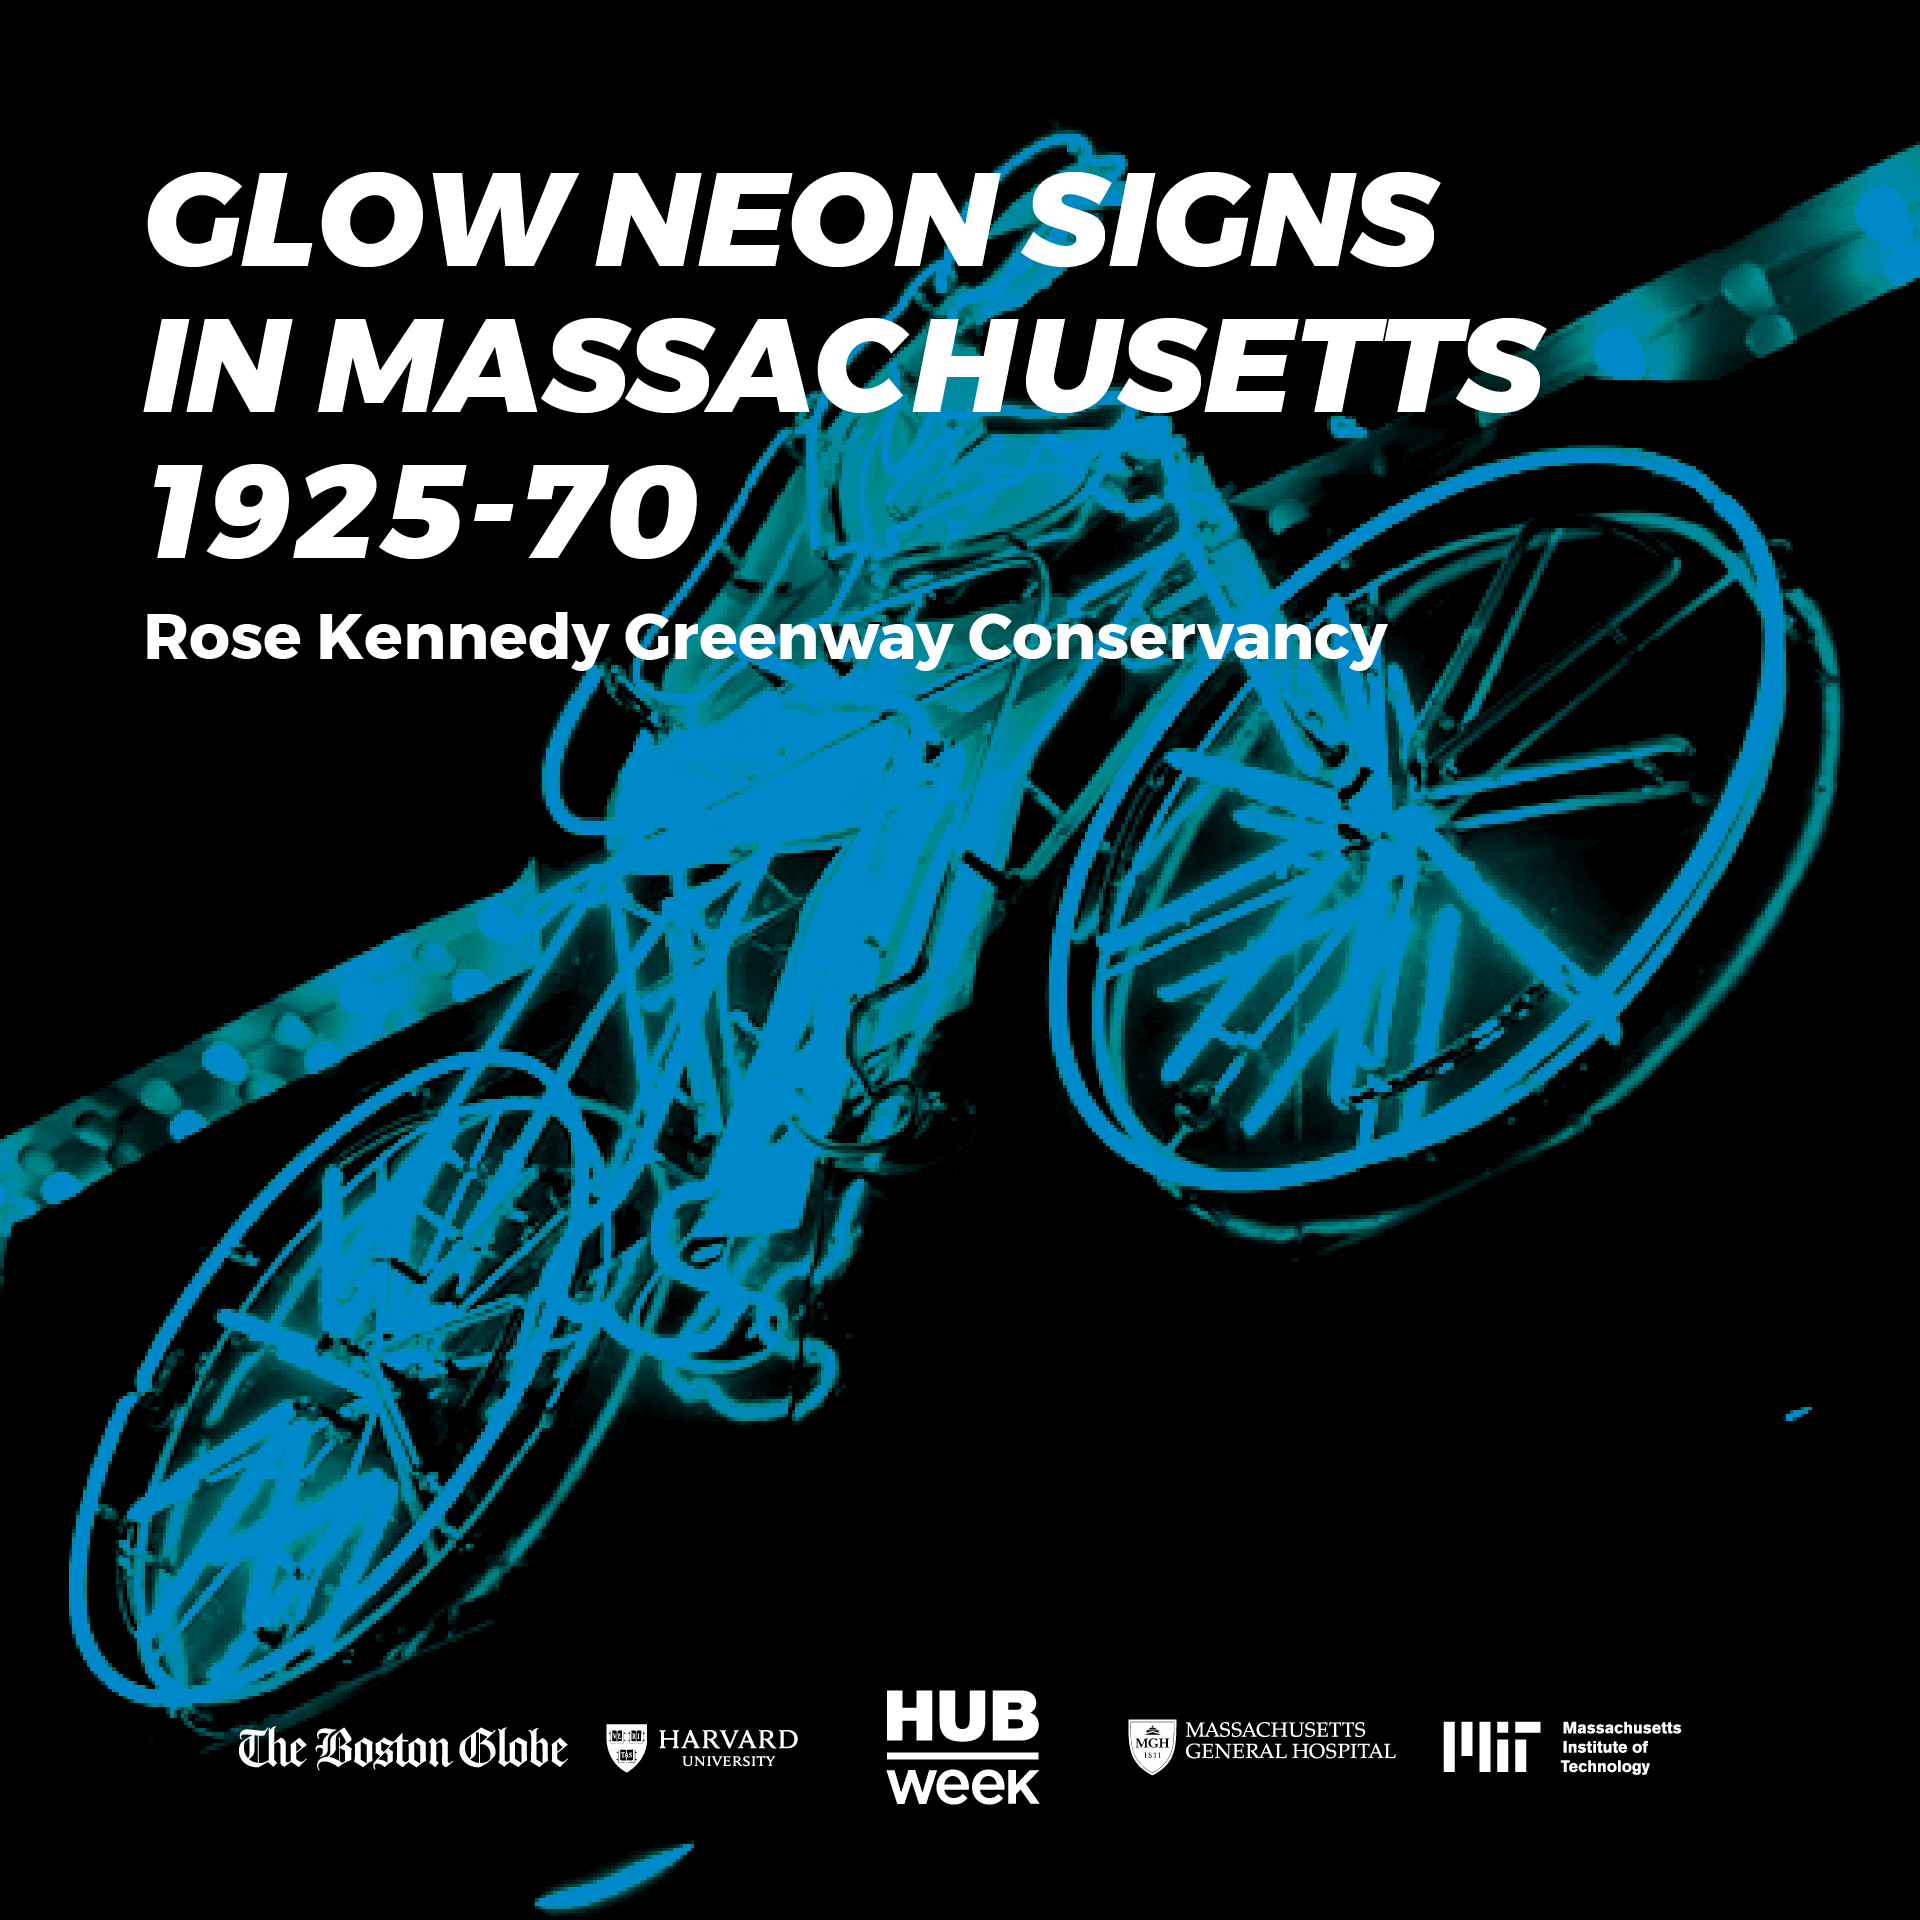 GLOW Neon Signs in Massachusetts, 1925-70-101